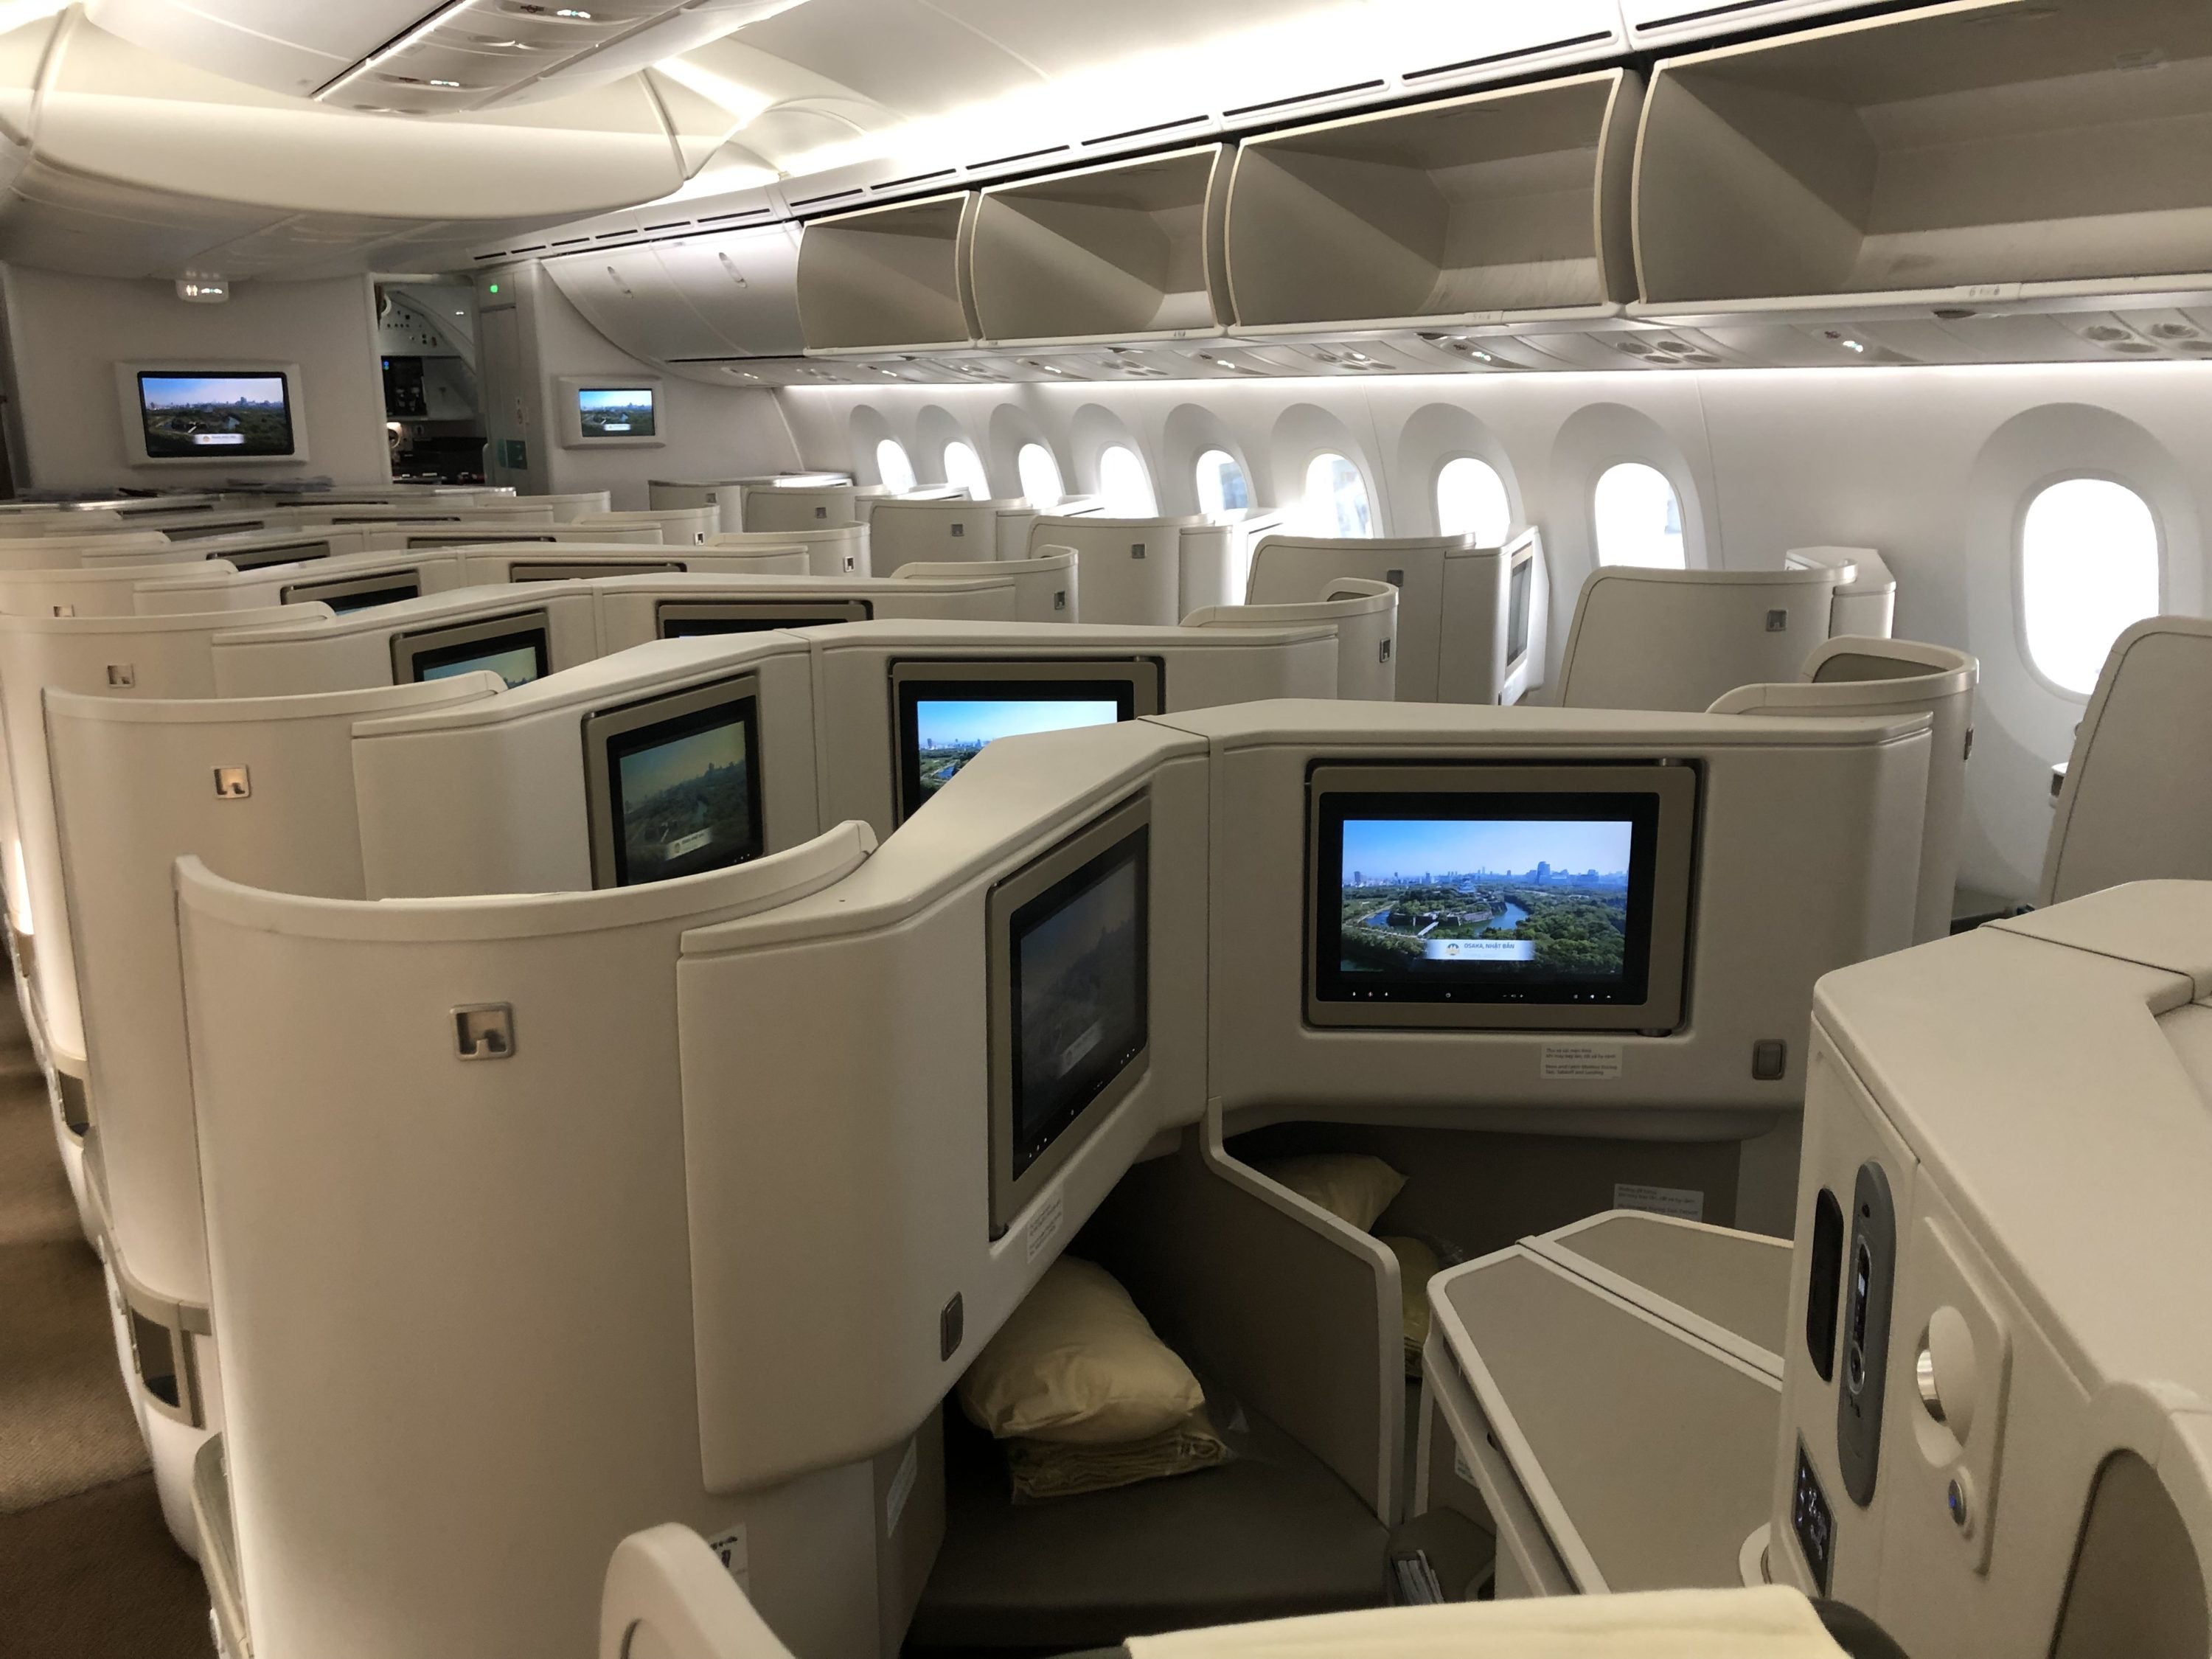 Vietnam Airlines 787-9 business class rear cabin view